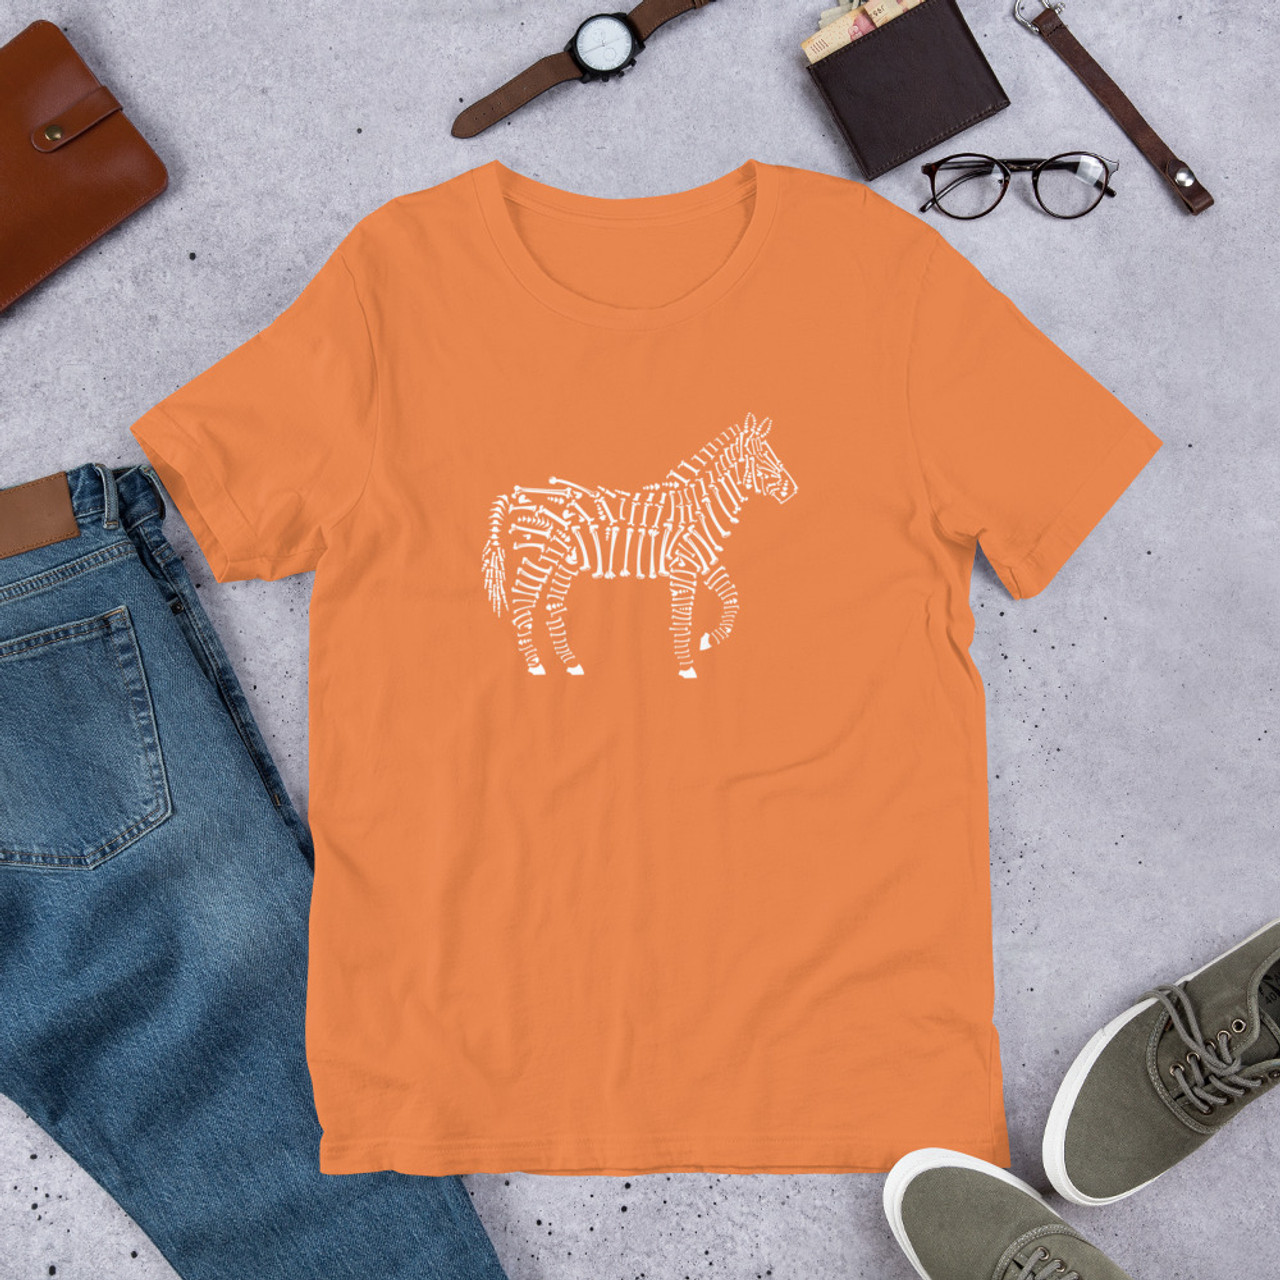 Burnt Orange T-Shirt - Bella + Canvas 3001 Zebra Skeleton